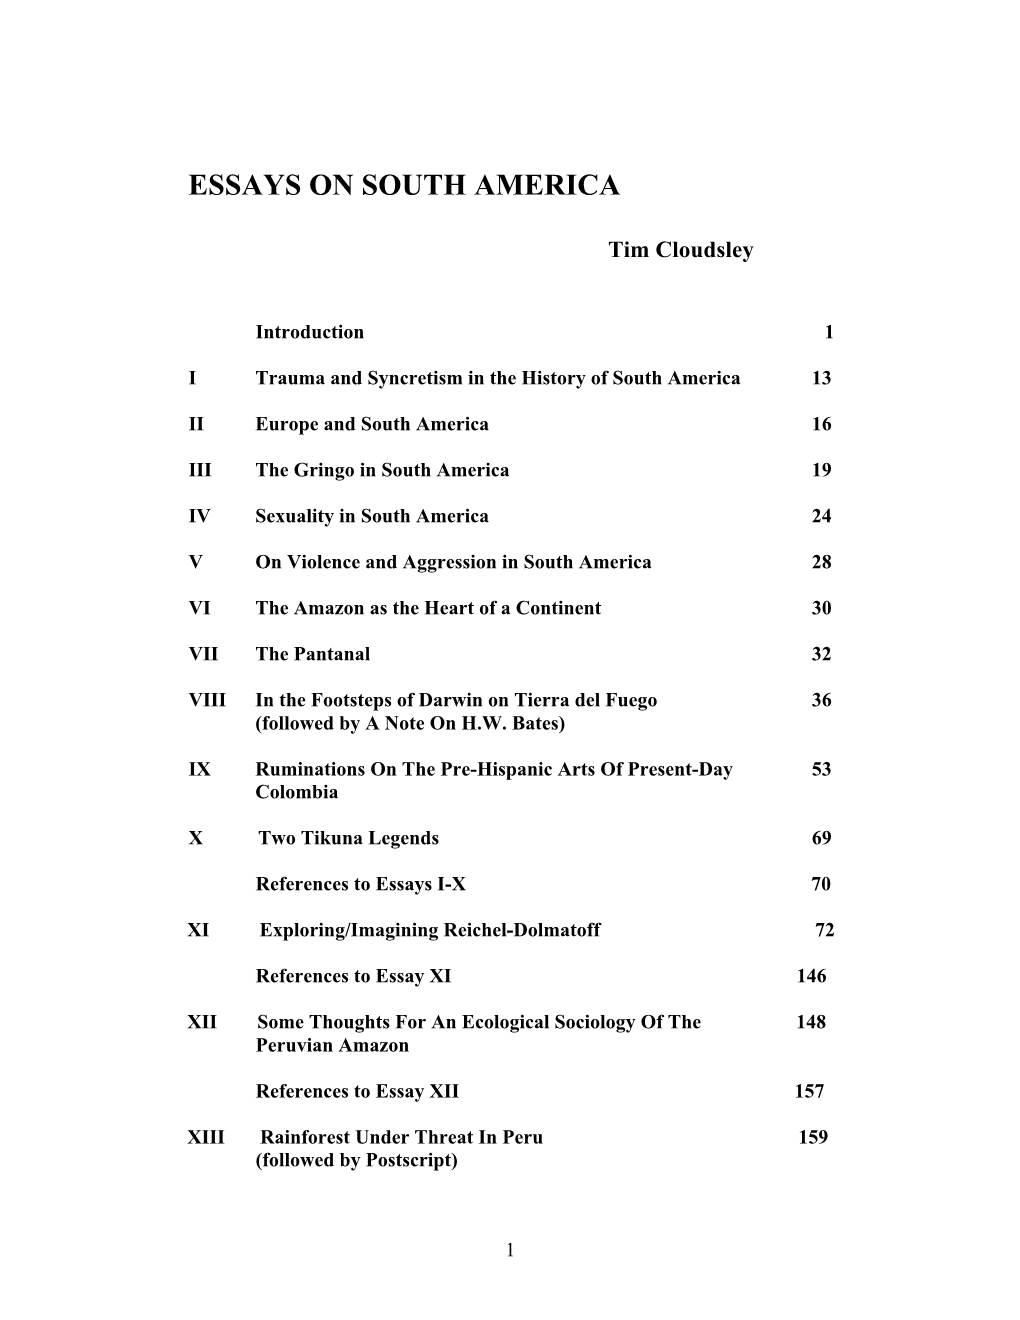 Essays on South America